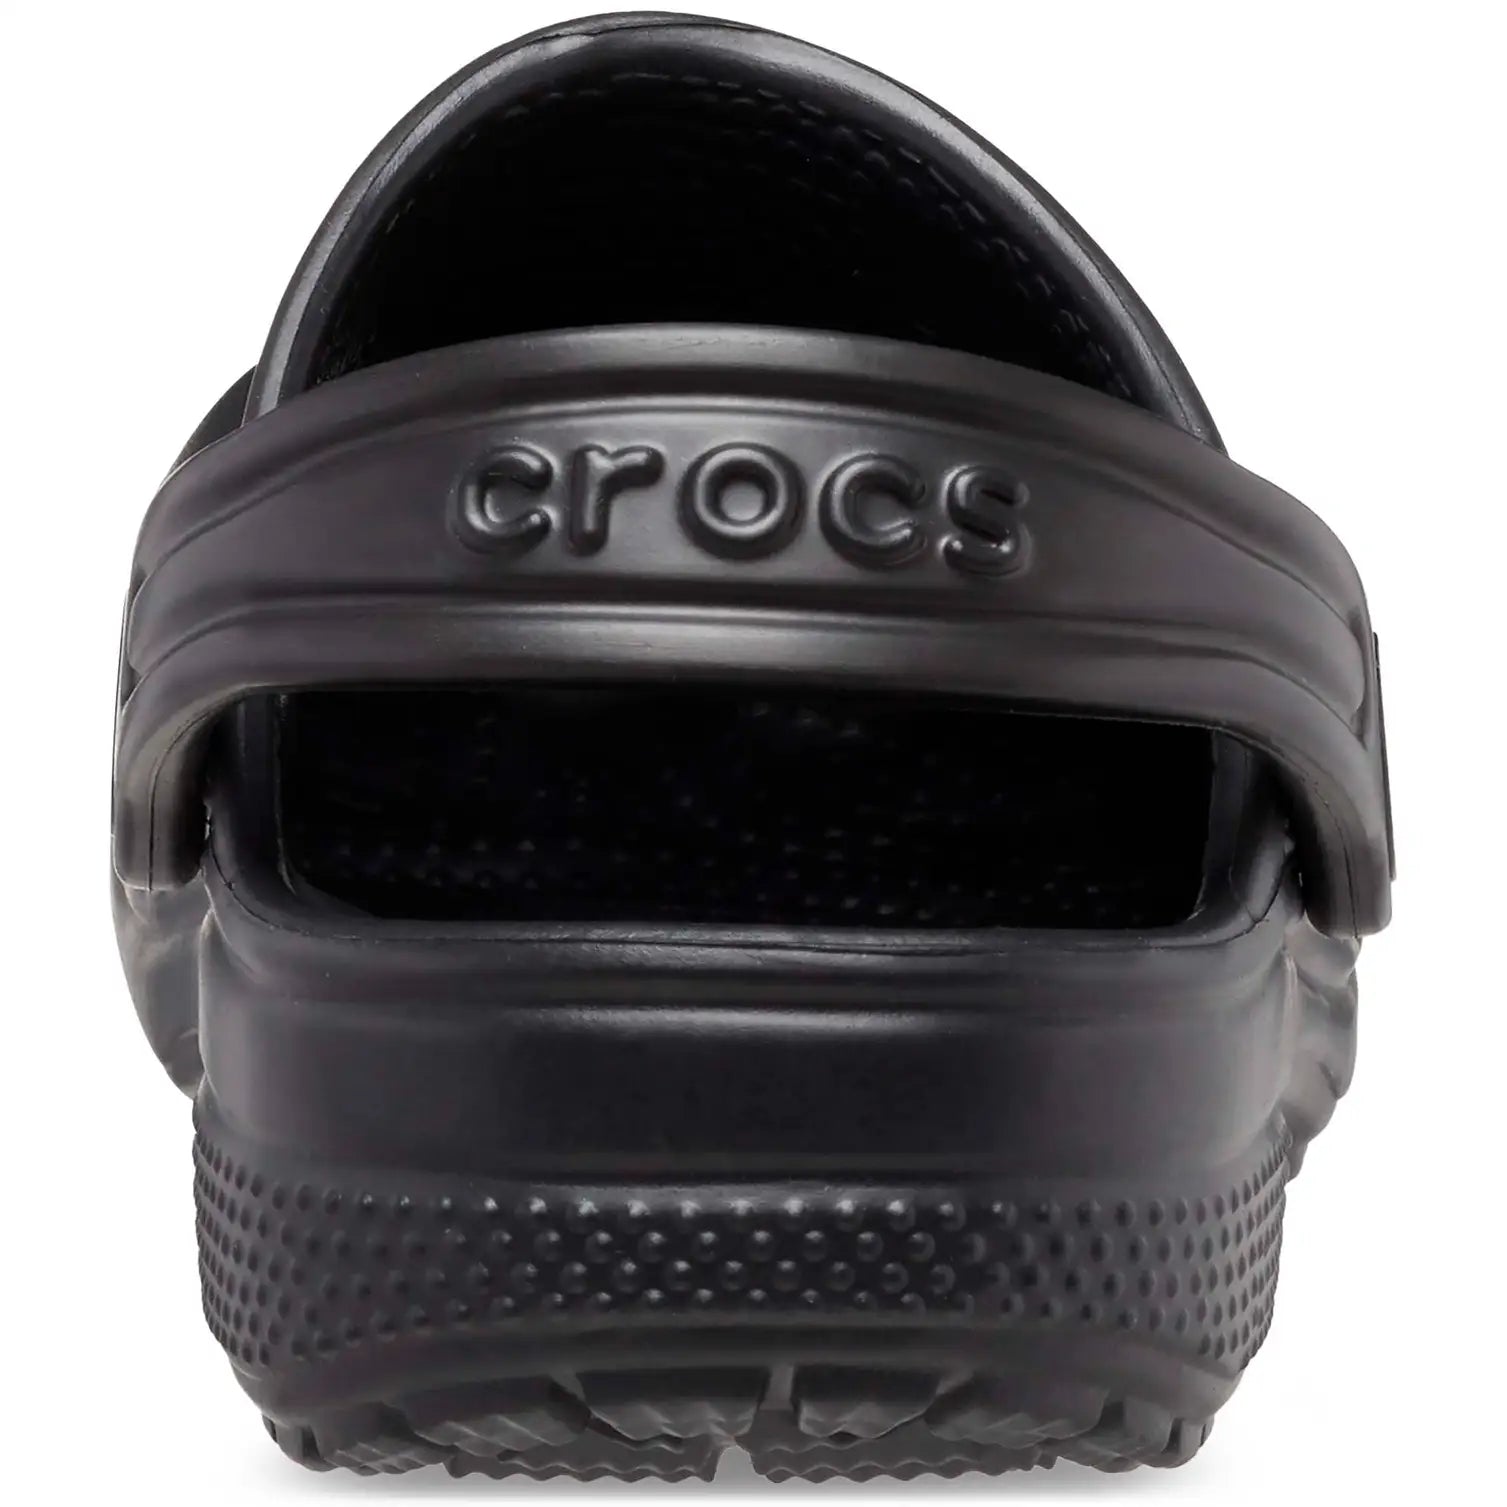 CR-N3 (Crocs classic clog toddlers black) 122292608